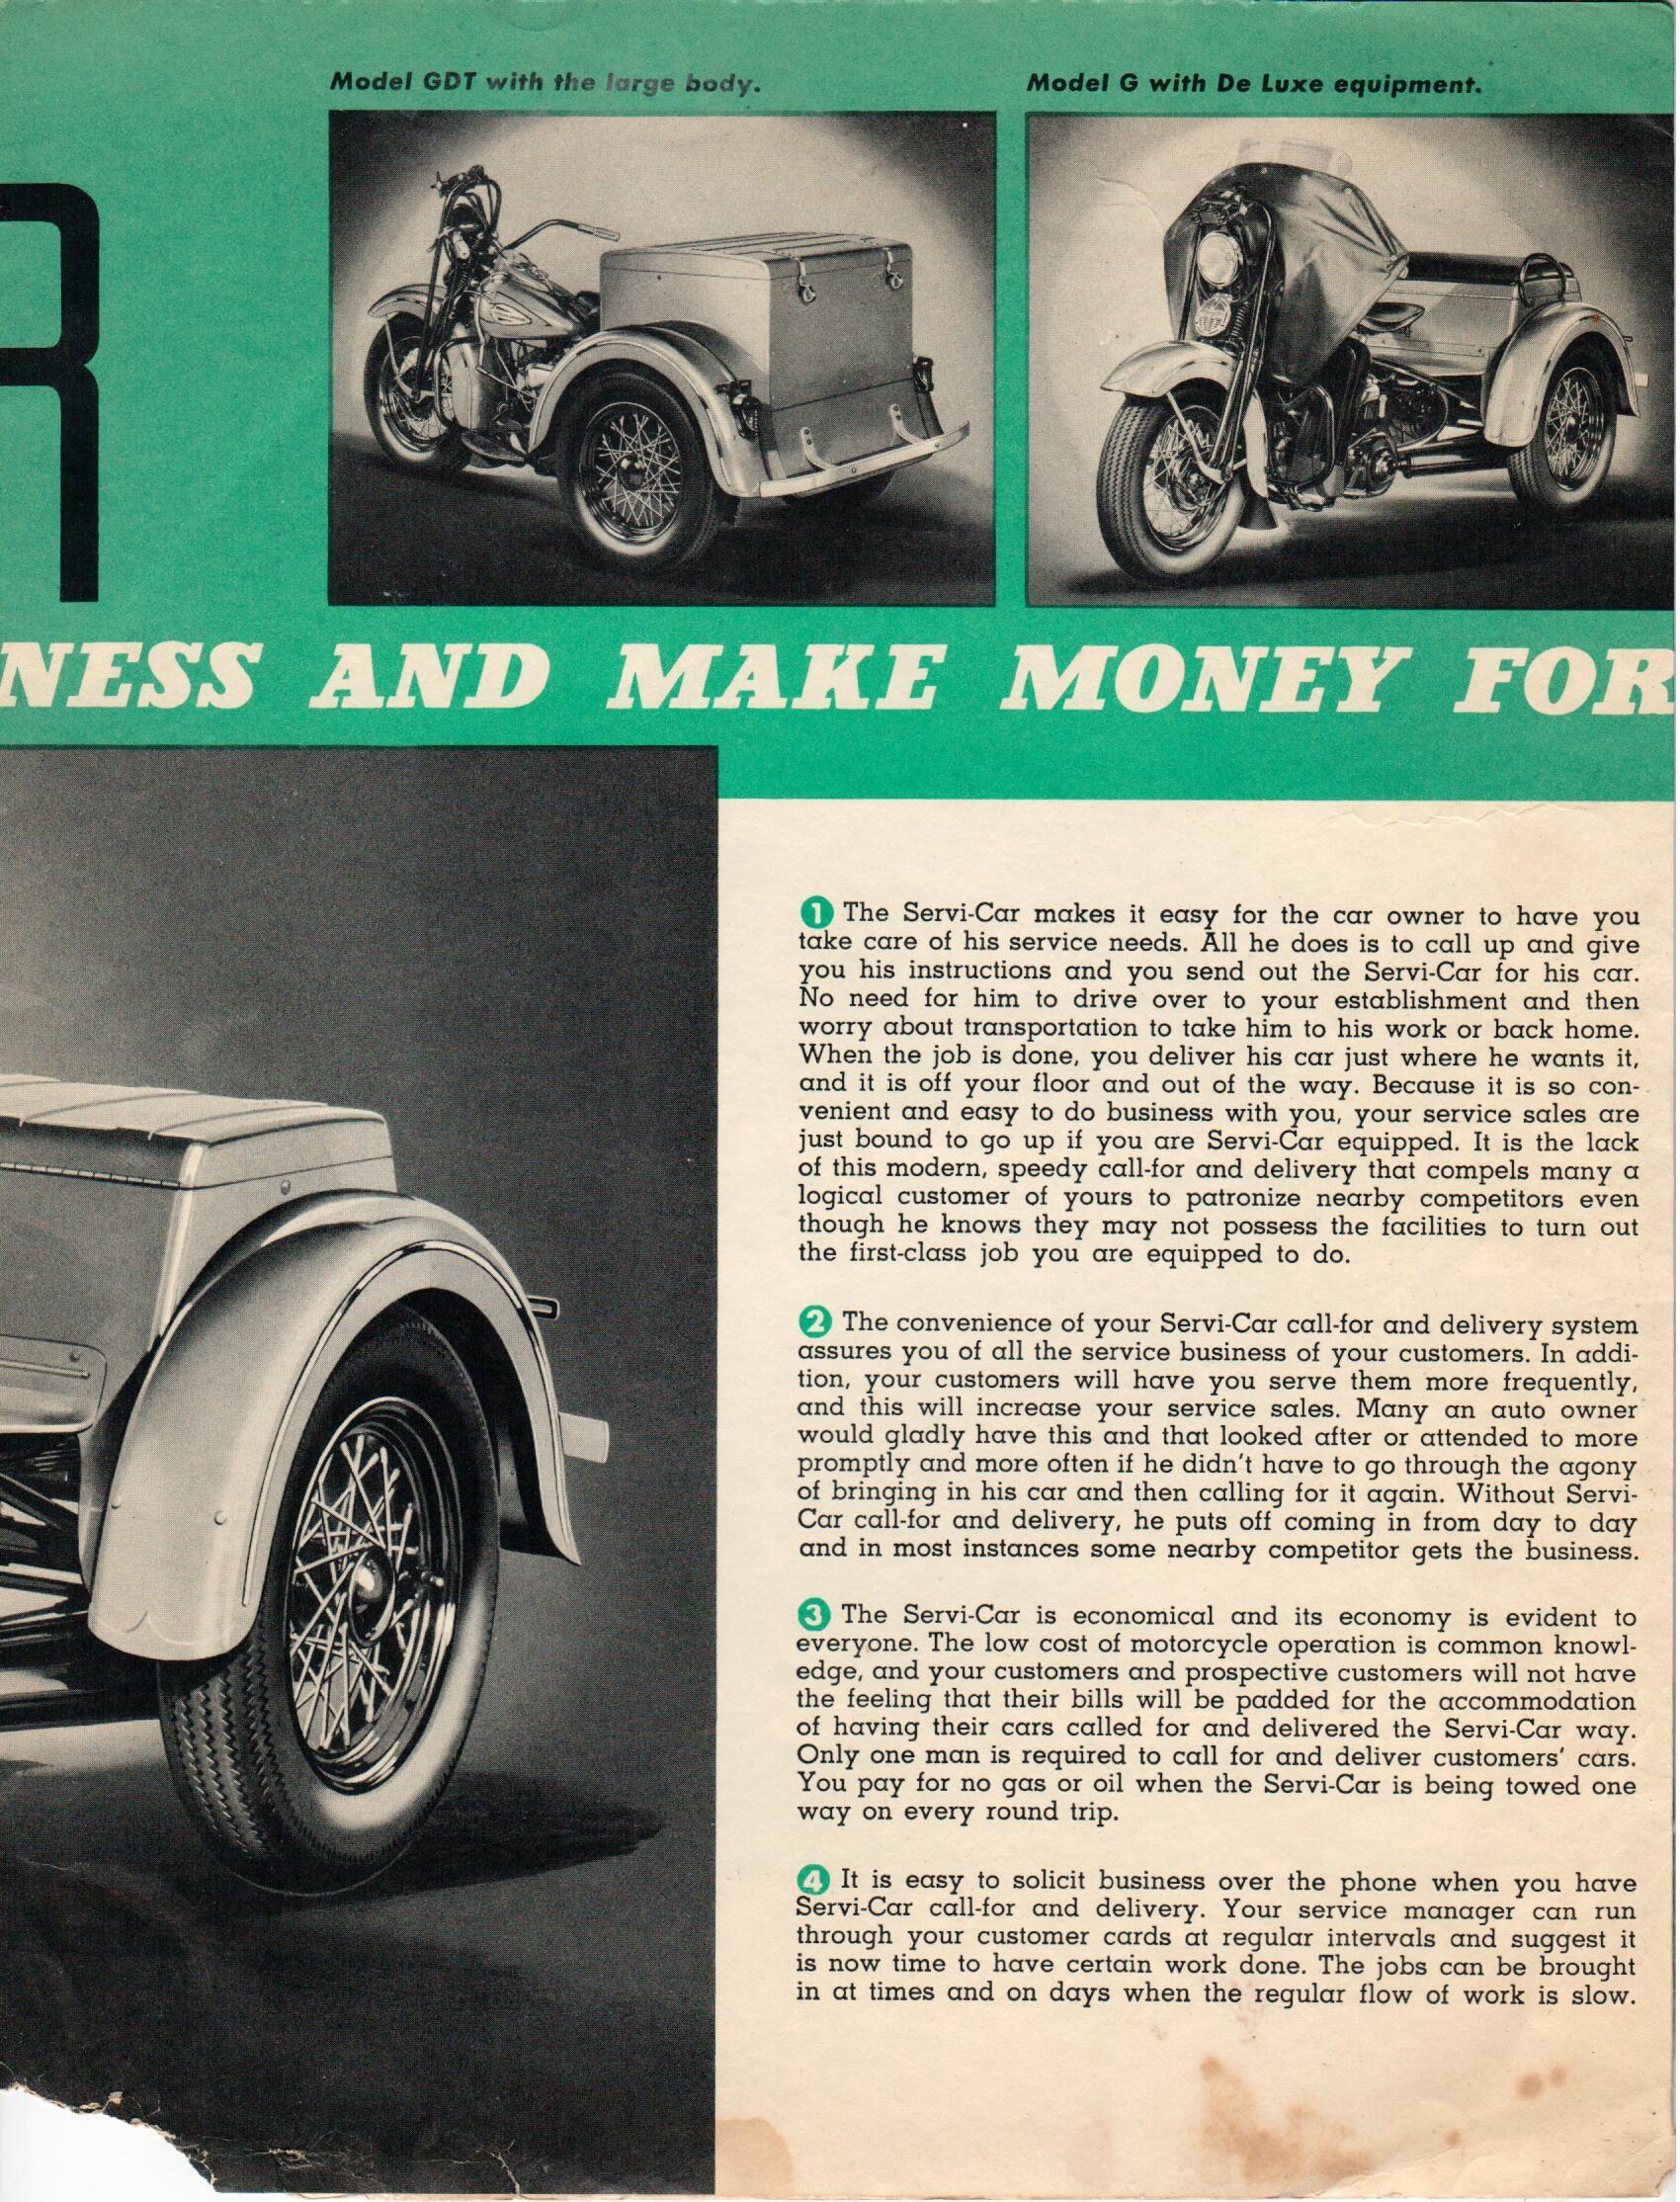 1940 - Harley-Davidson Servicar folleto